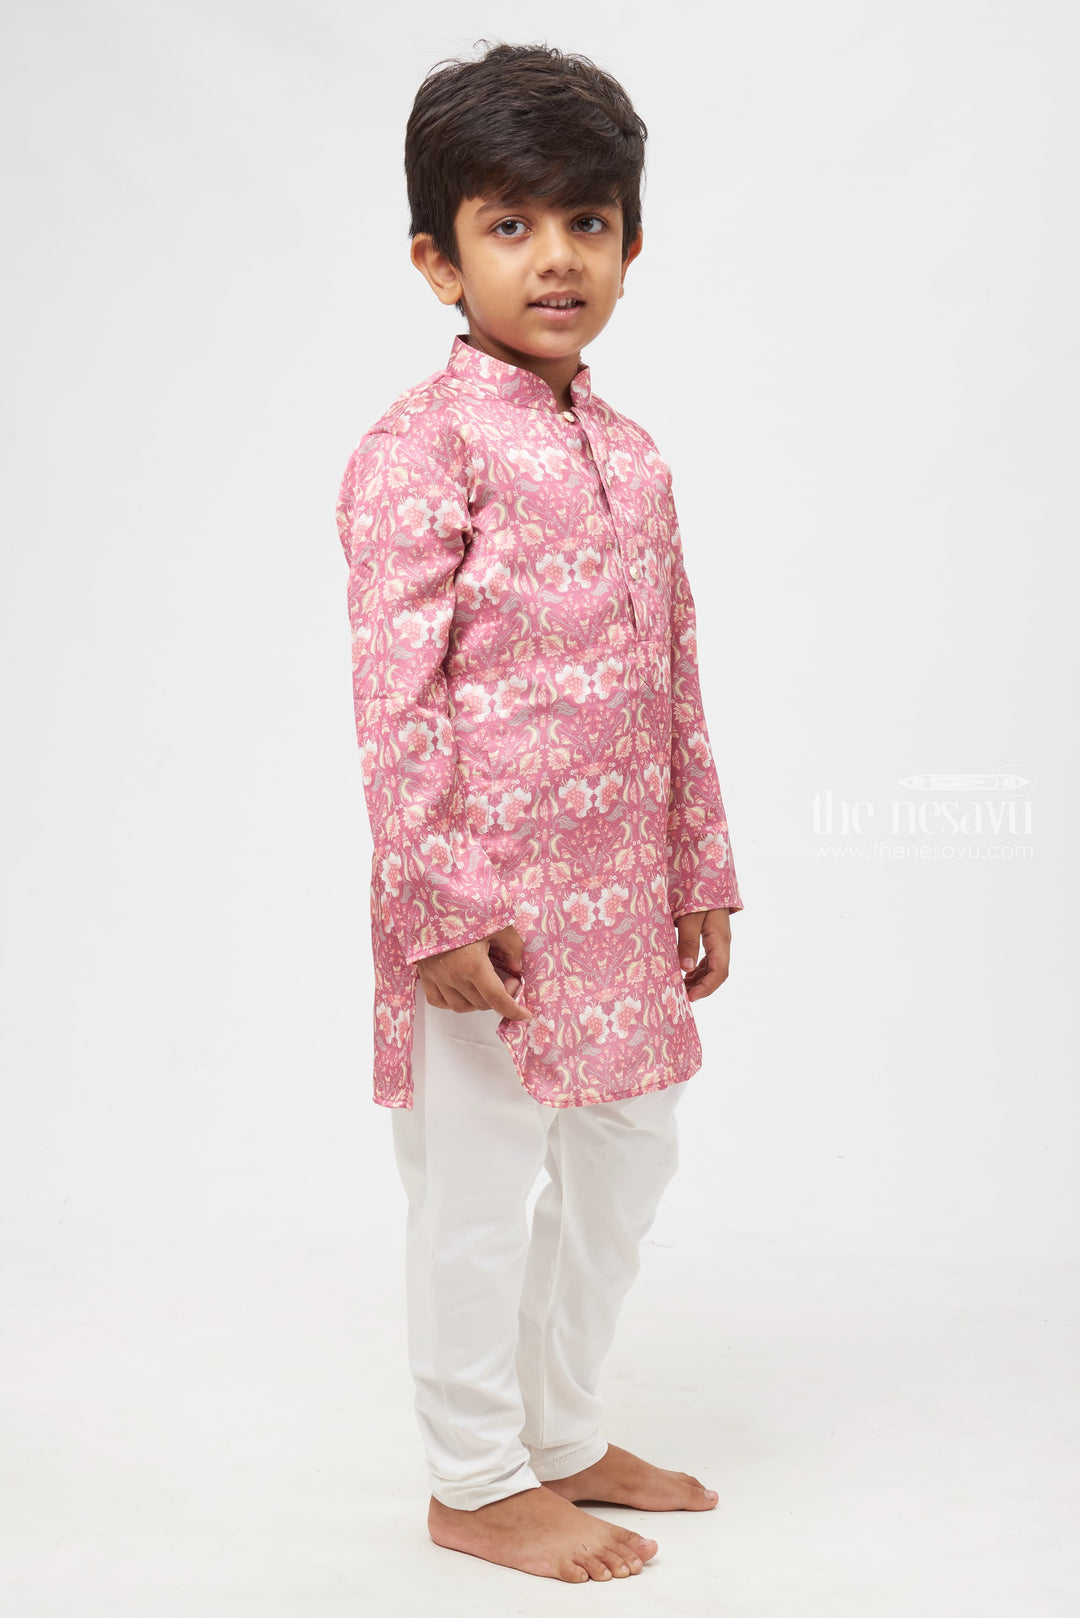 The Nesavu Boys Kurtha Set Vintage Blossom: Antique Pink Floral Kurta with Classic White Pants for Boys Nesavu Timeless Elegance for Special Occasions | Boys Antique Pink Floral Kurta & White Pants | The Nesavu